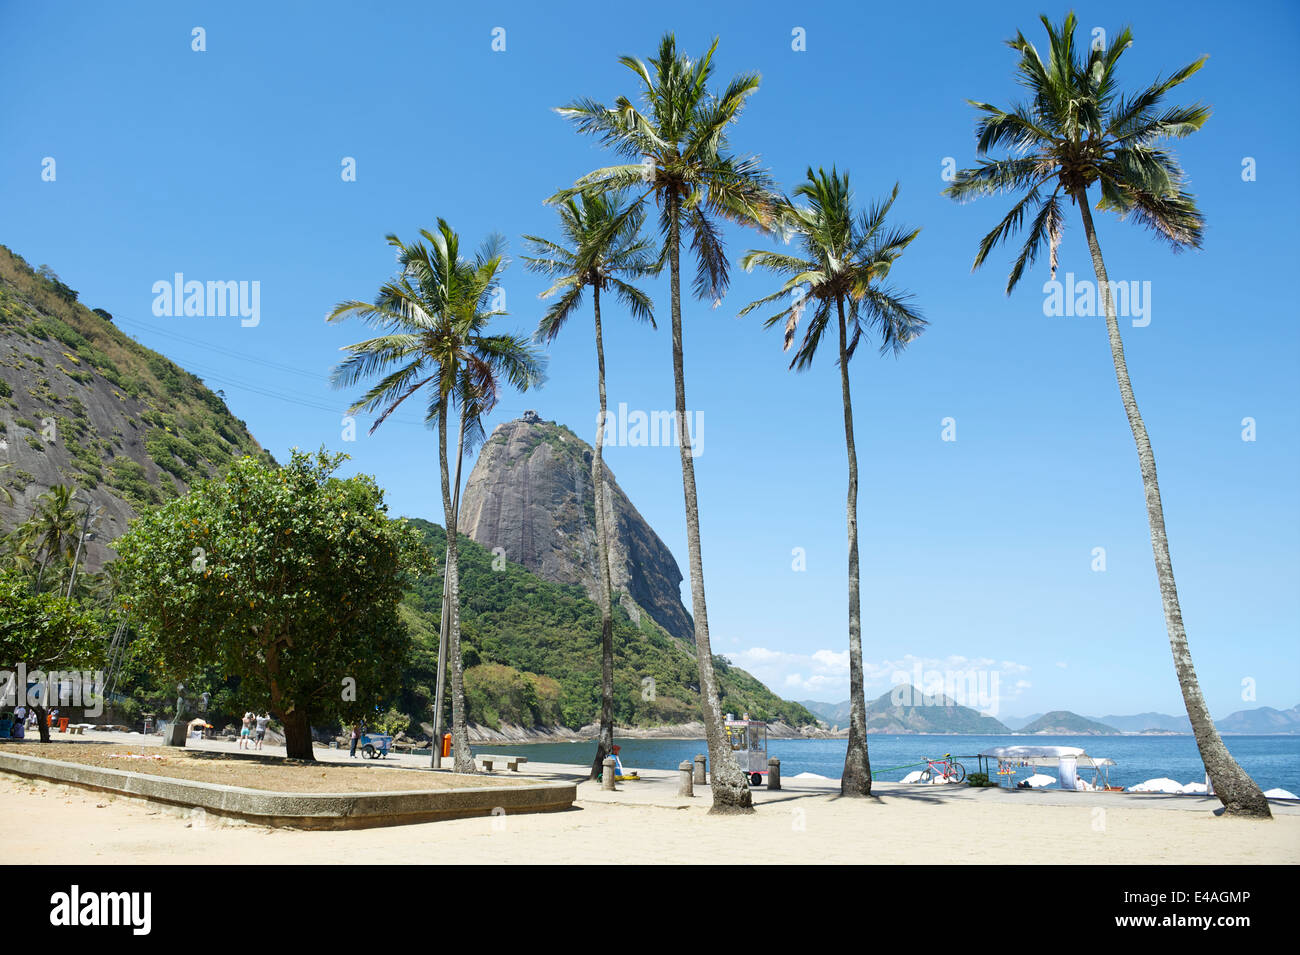 Classic view of Sugarloaf Mountain Pao de Acucar Rio de Janeiro Brazil and Praia Vermelha Red Beach at Urca with palm trees Stock Photo